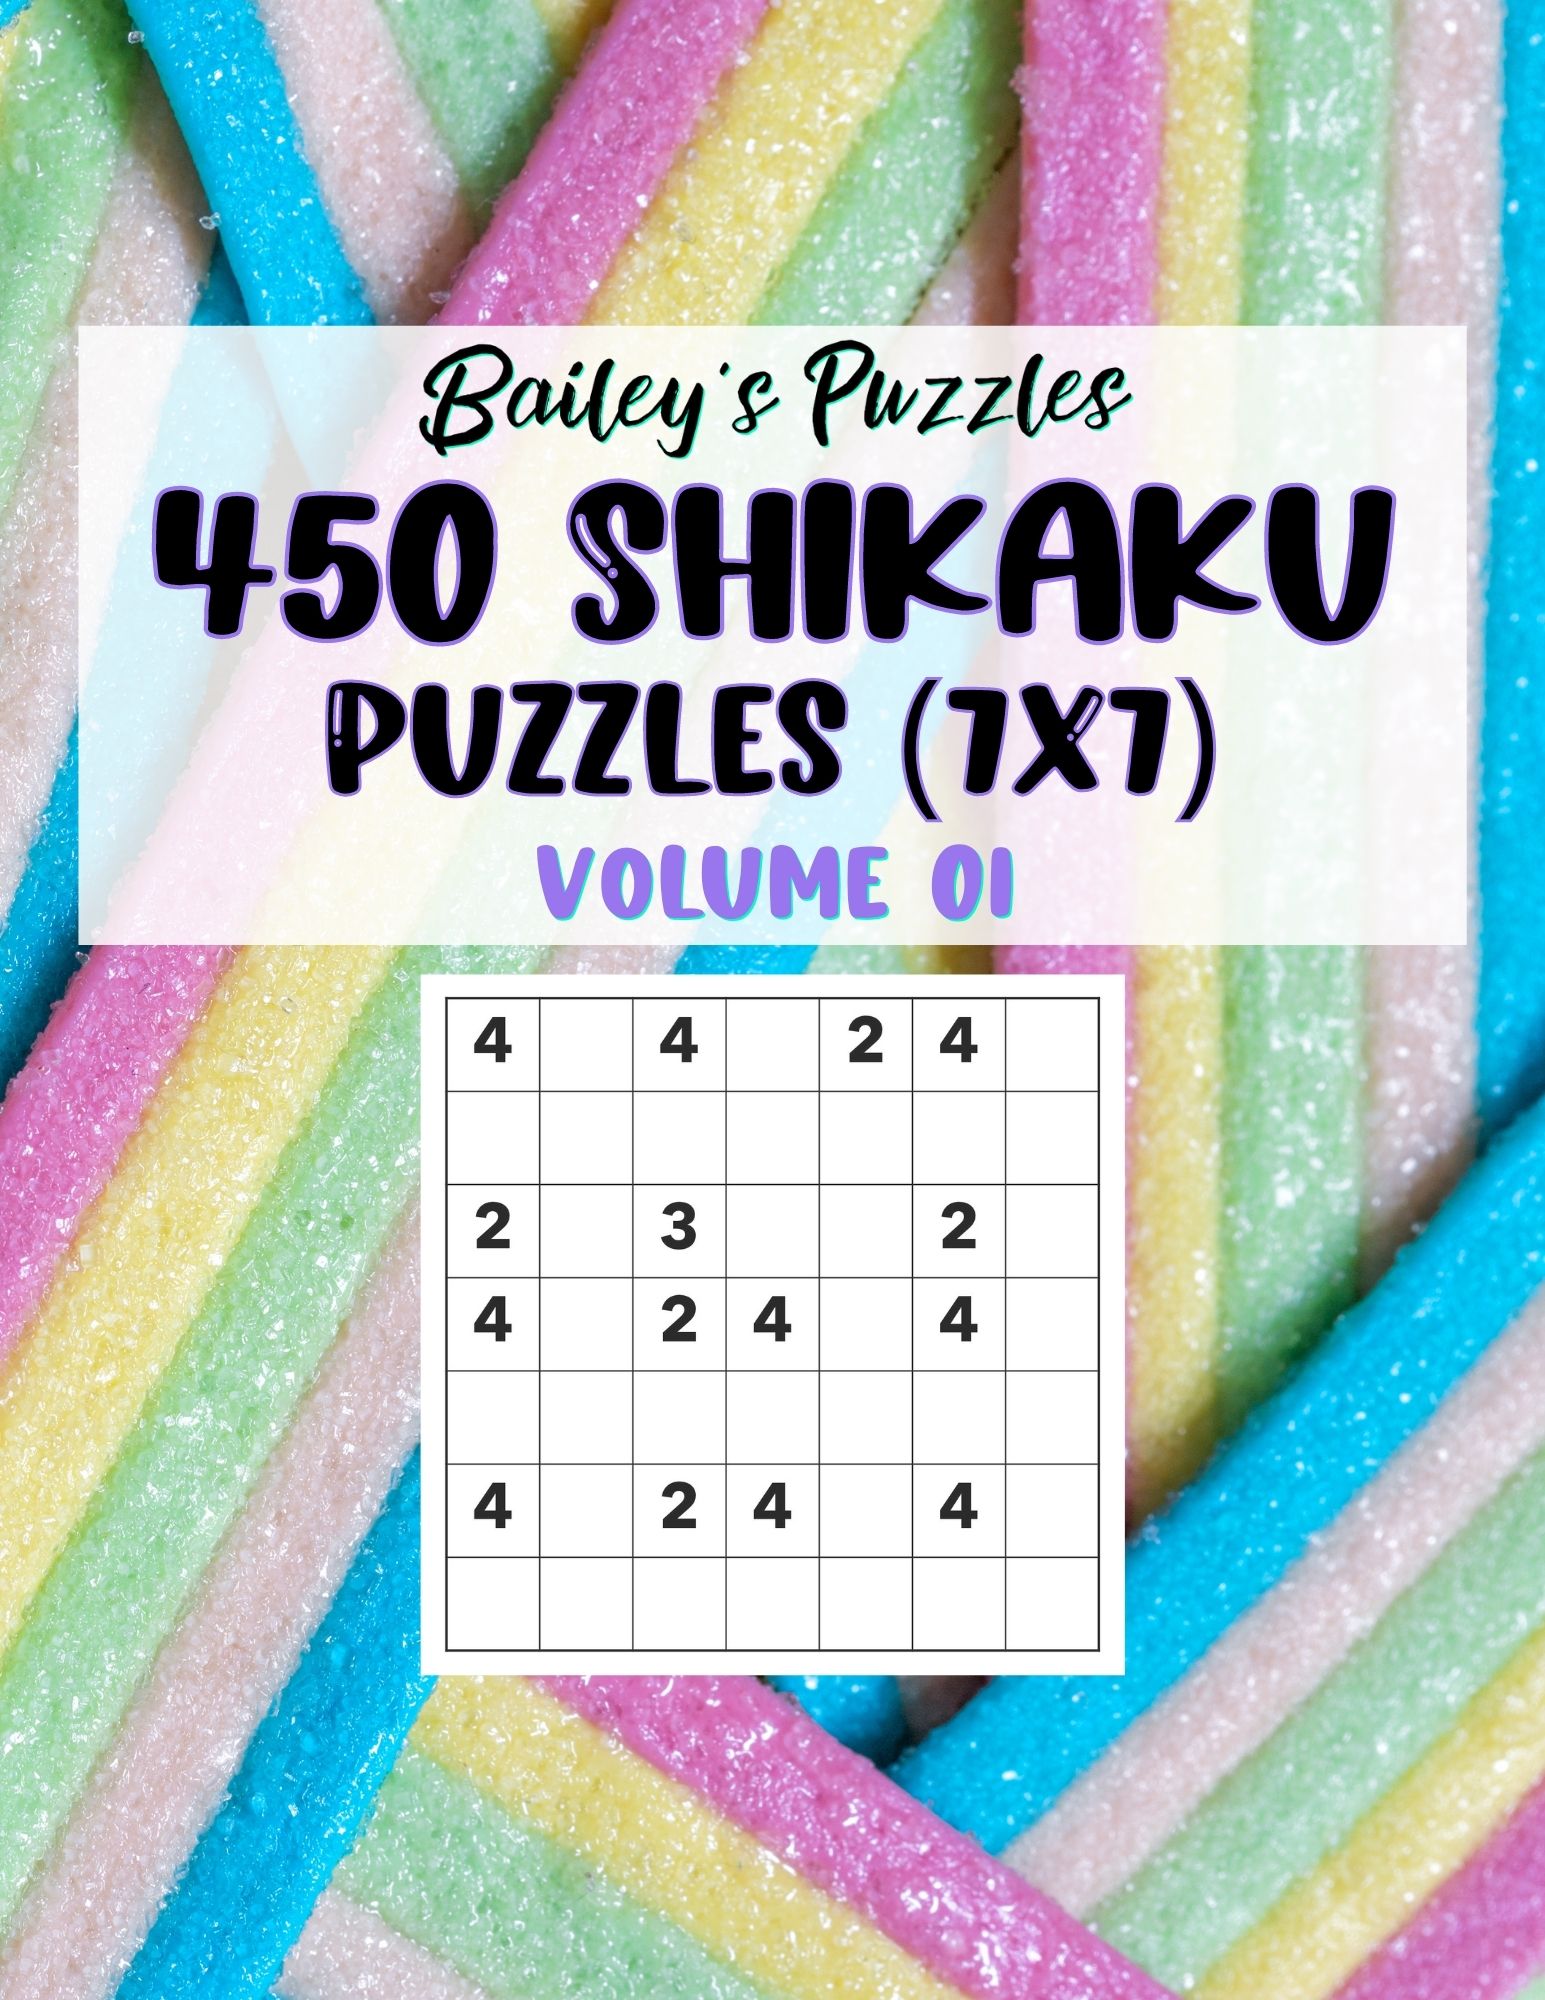 Front Cover - 450 Shikaku Puzzles (7x7)